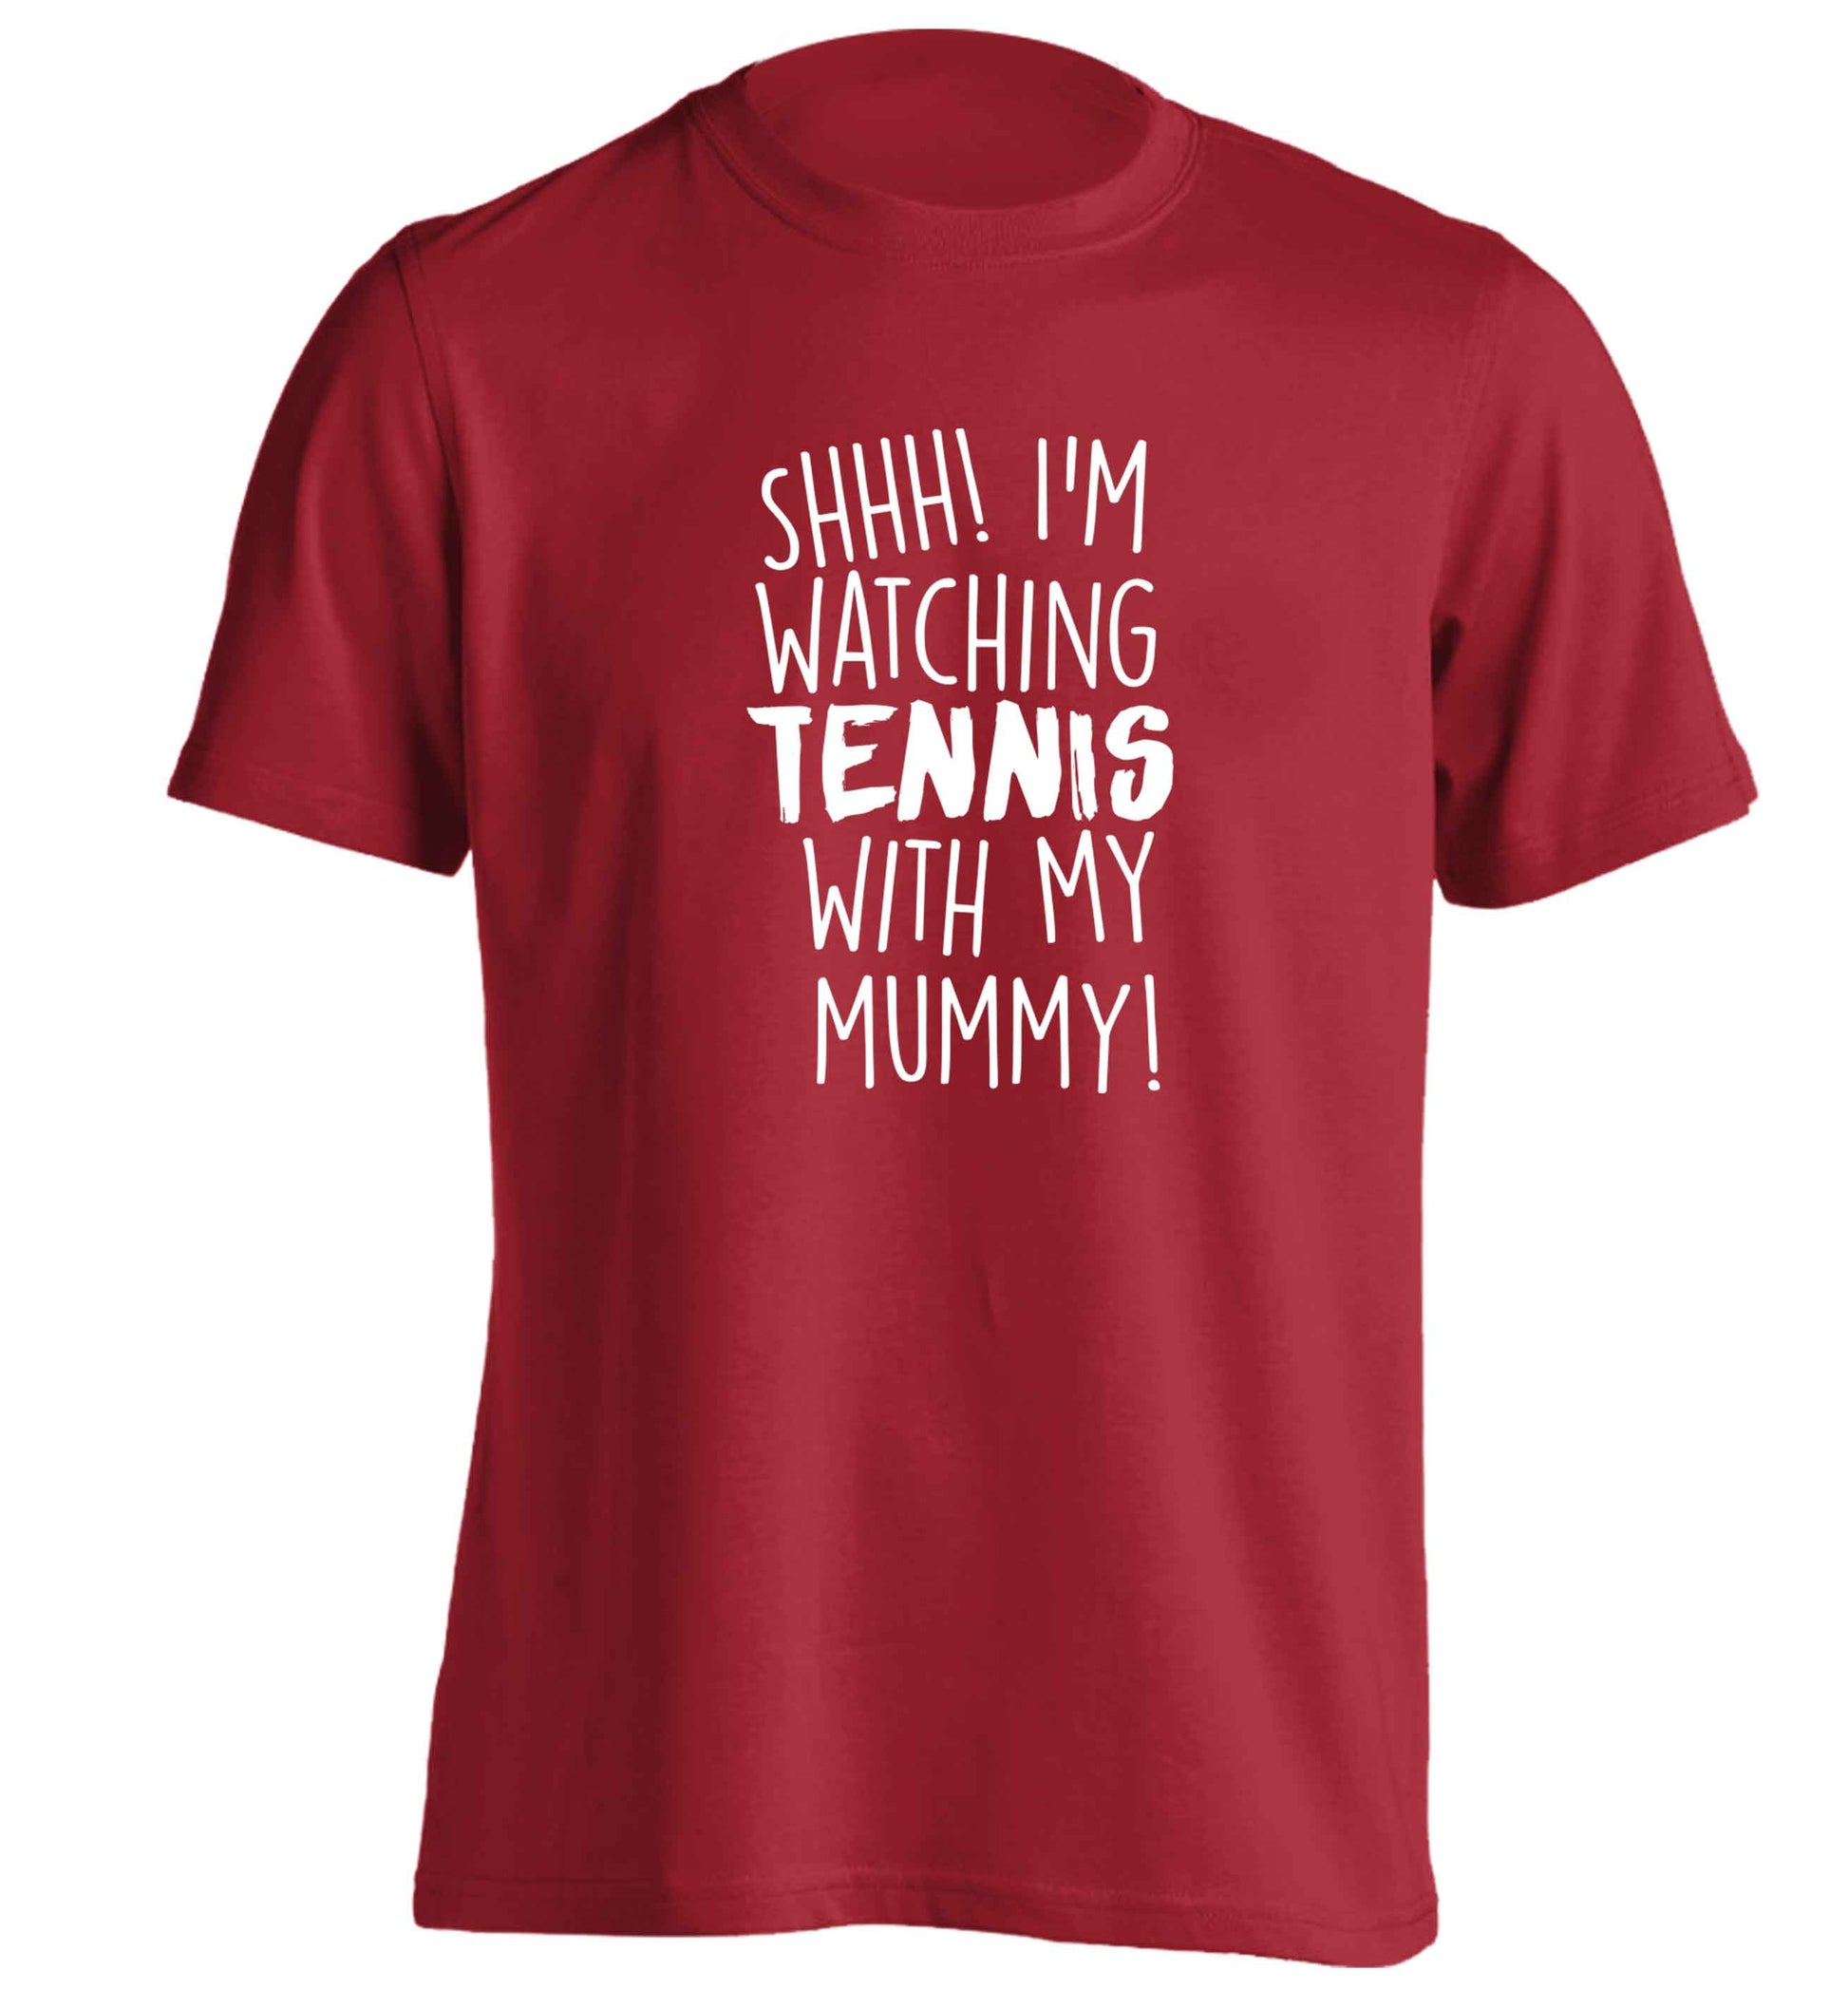 Shh! I'm watching tennis with my mummy! adults unisex red Tshirt 2XL